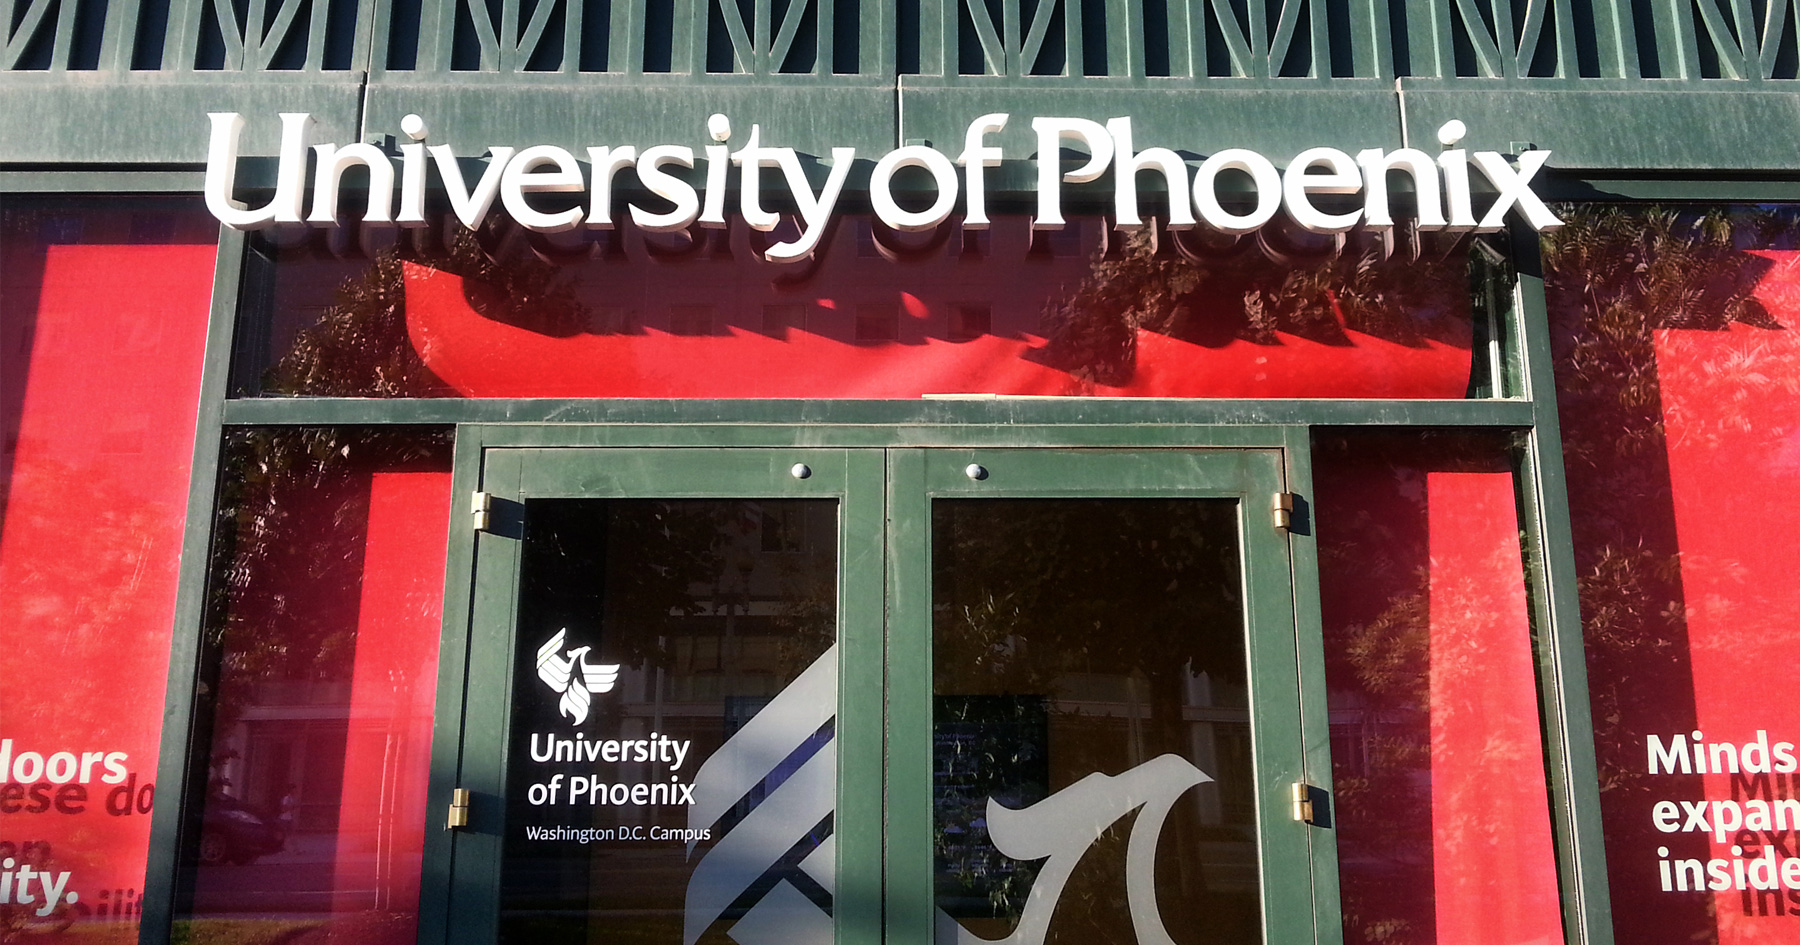 University of Phoenix campus in Washington, DC